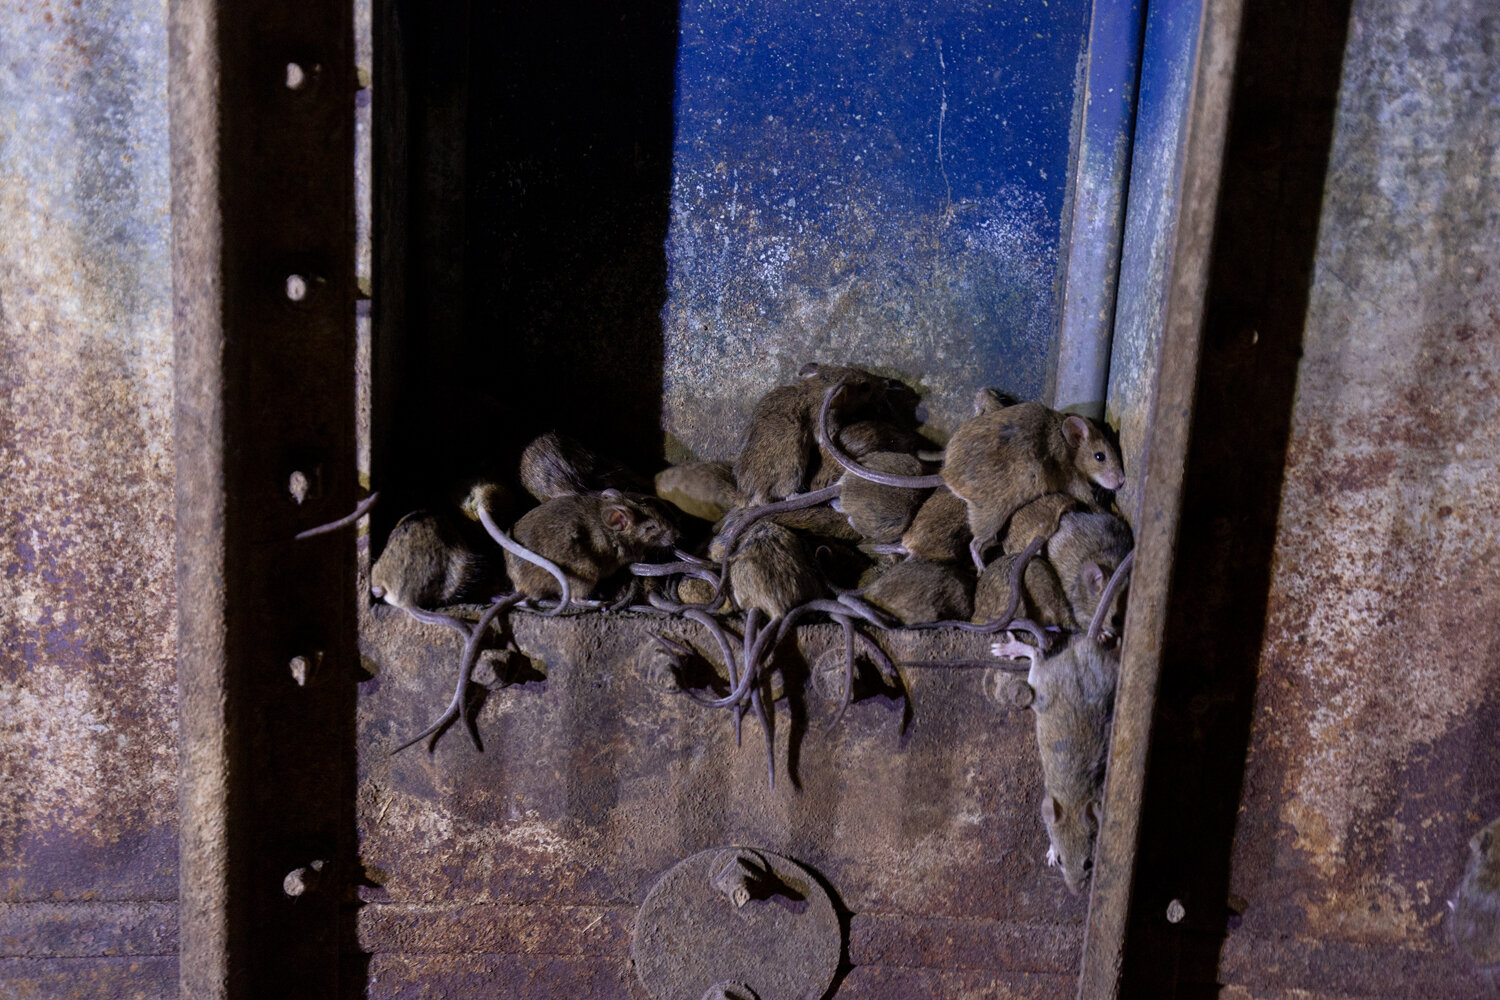  Mice in a grain silo on the Fragar farm. 